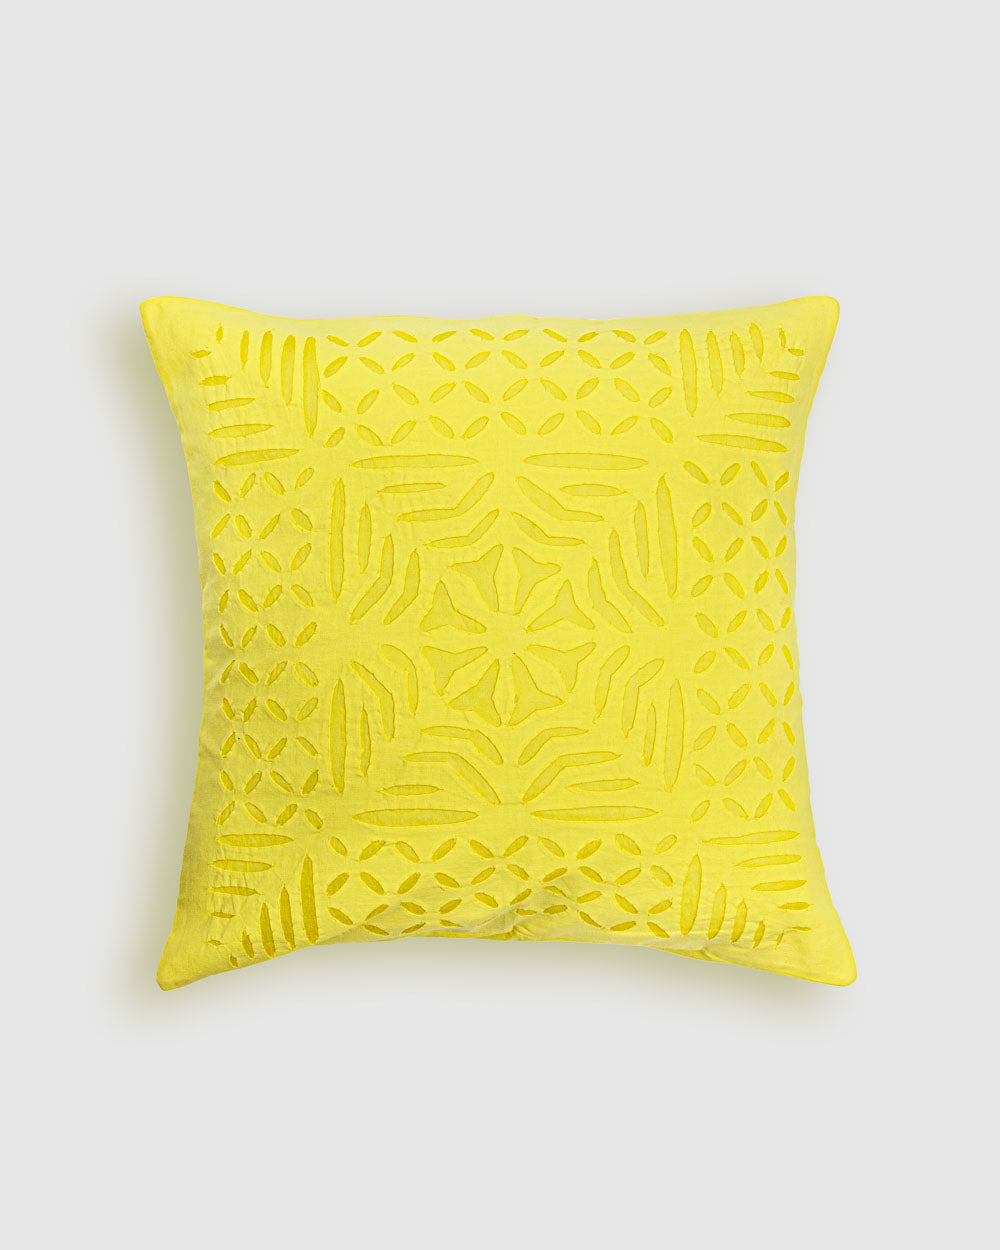 Cushion Cover Applique Gulchand Design, Yellow